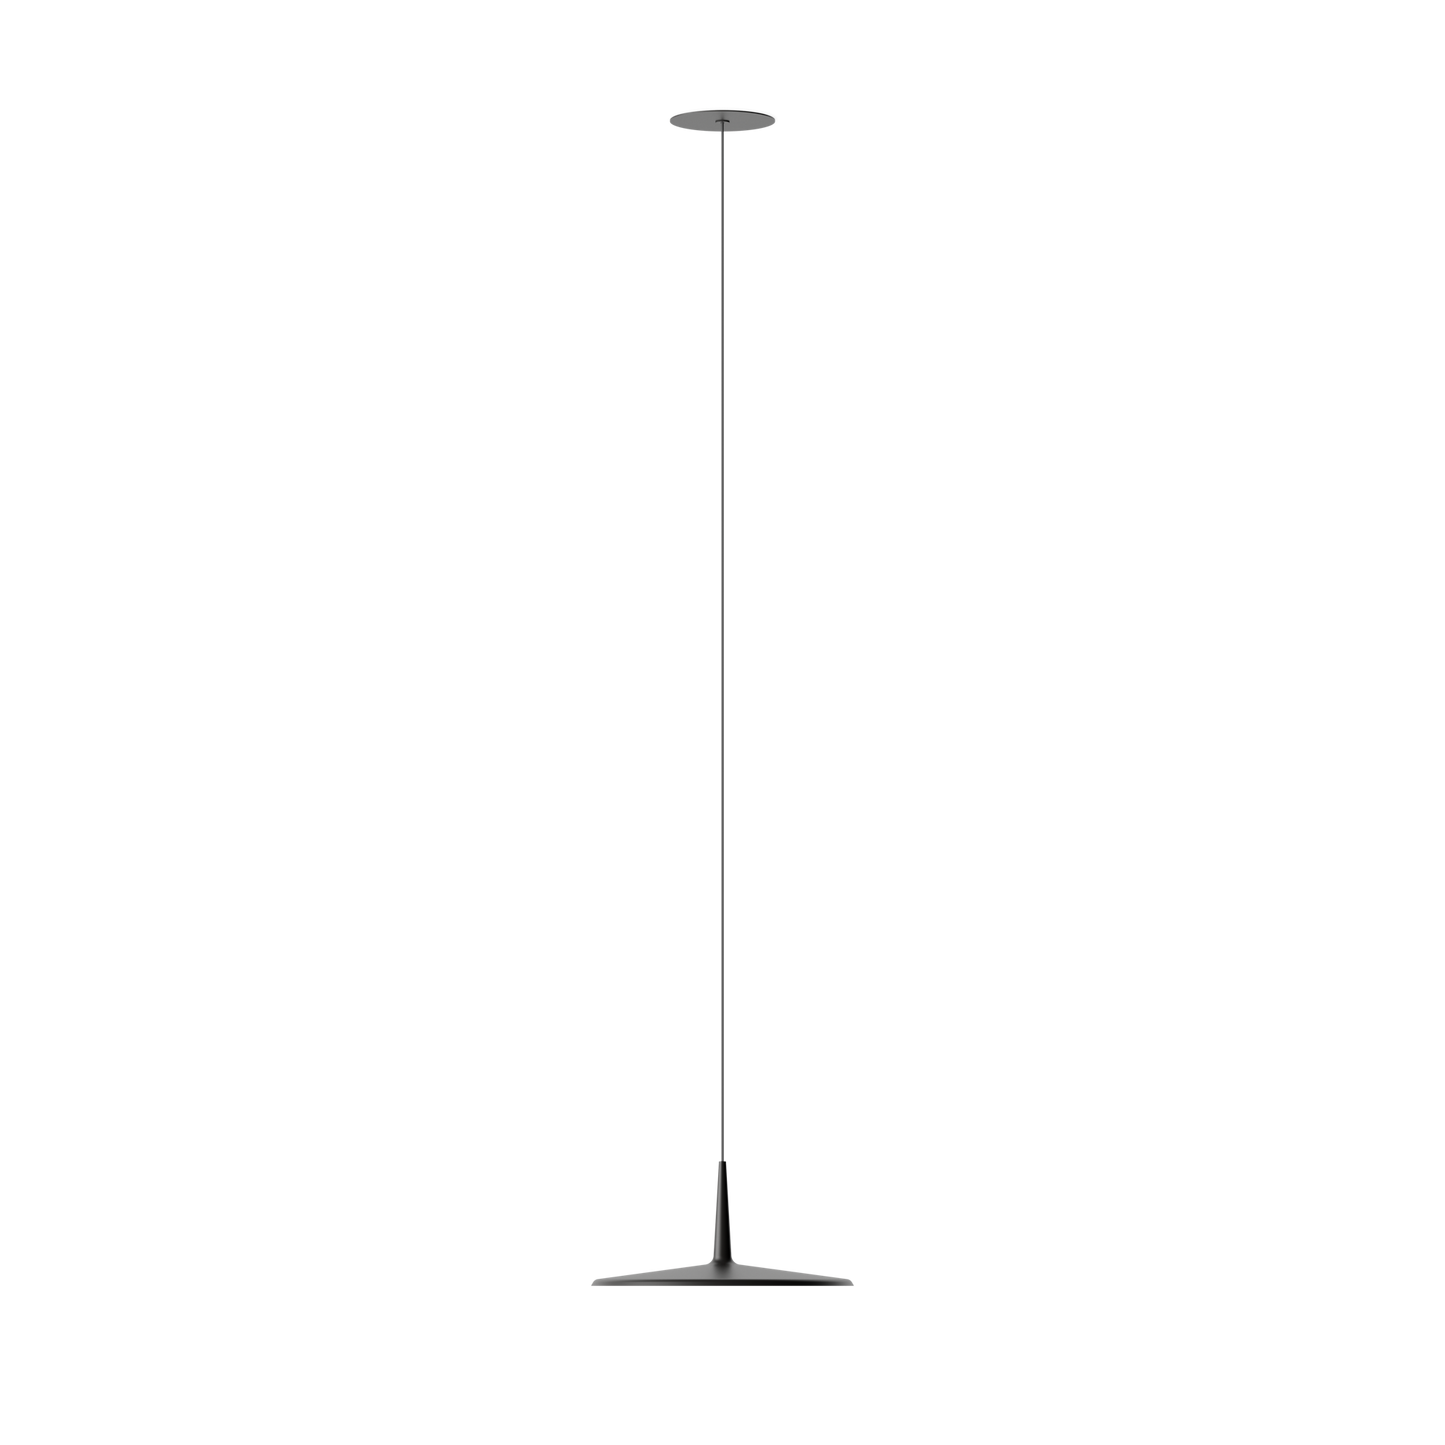 Skan Pendant Lamp Small by Vibia #Black